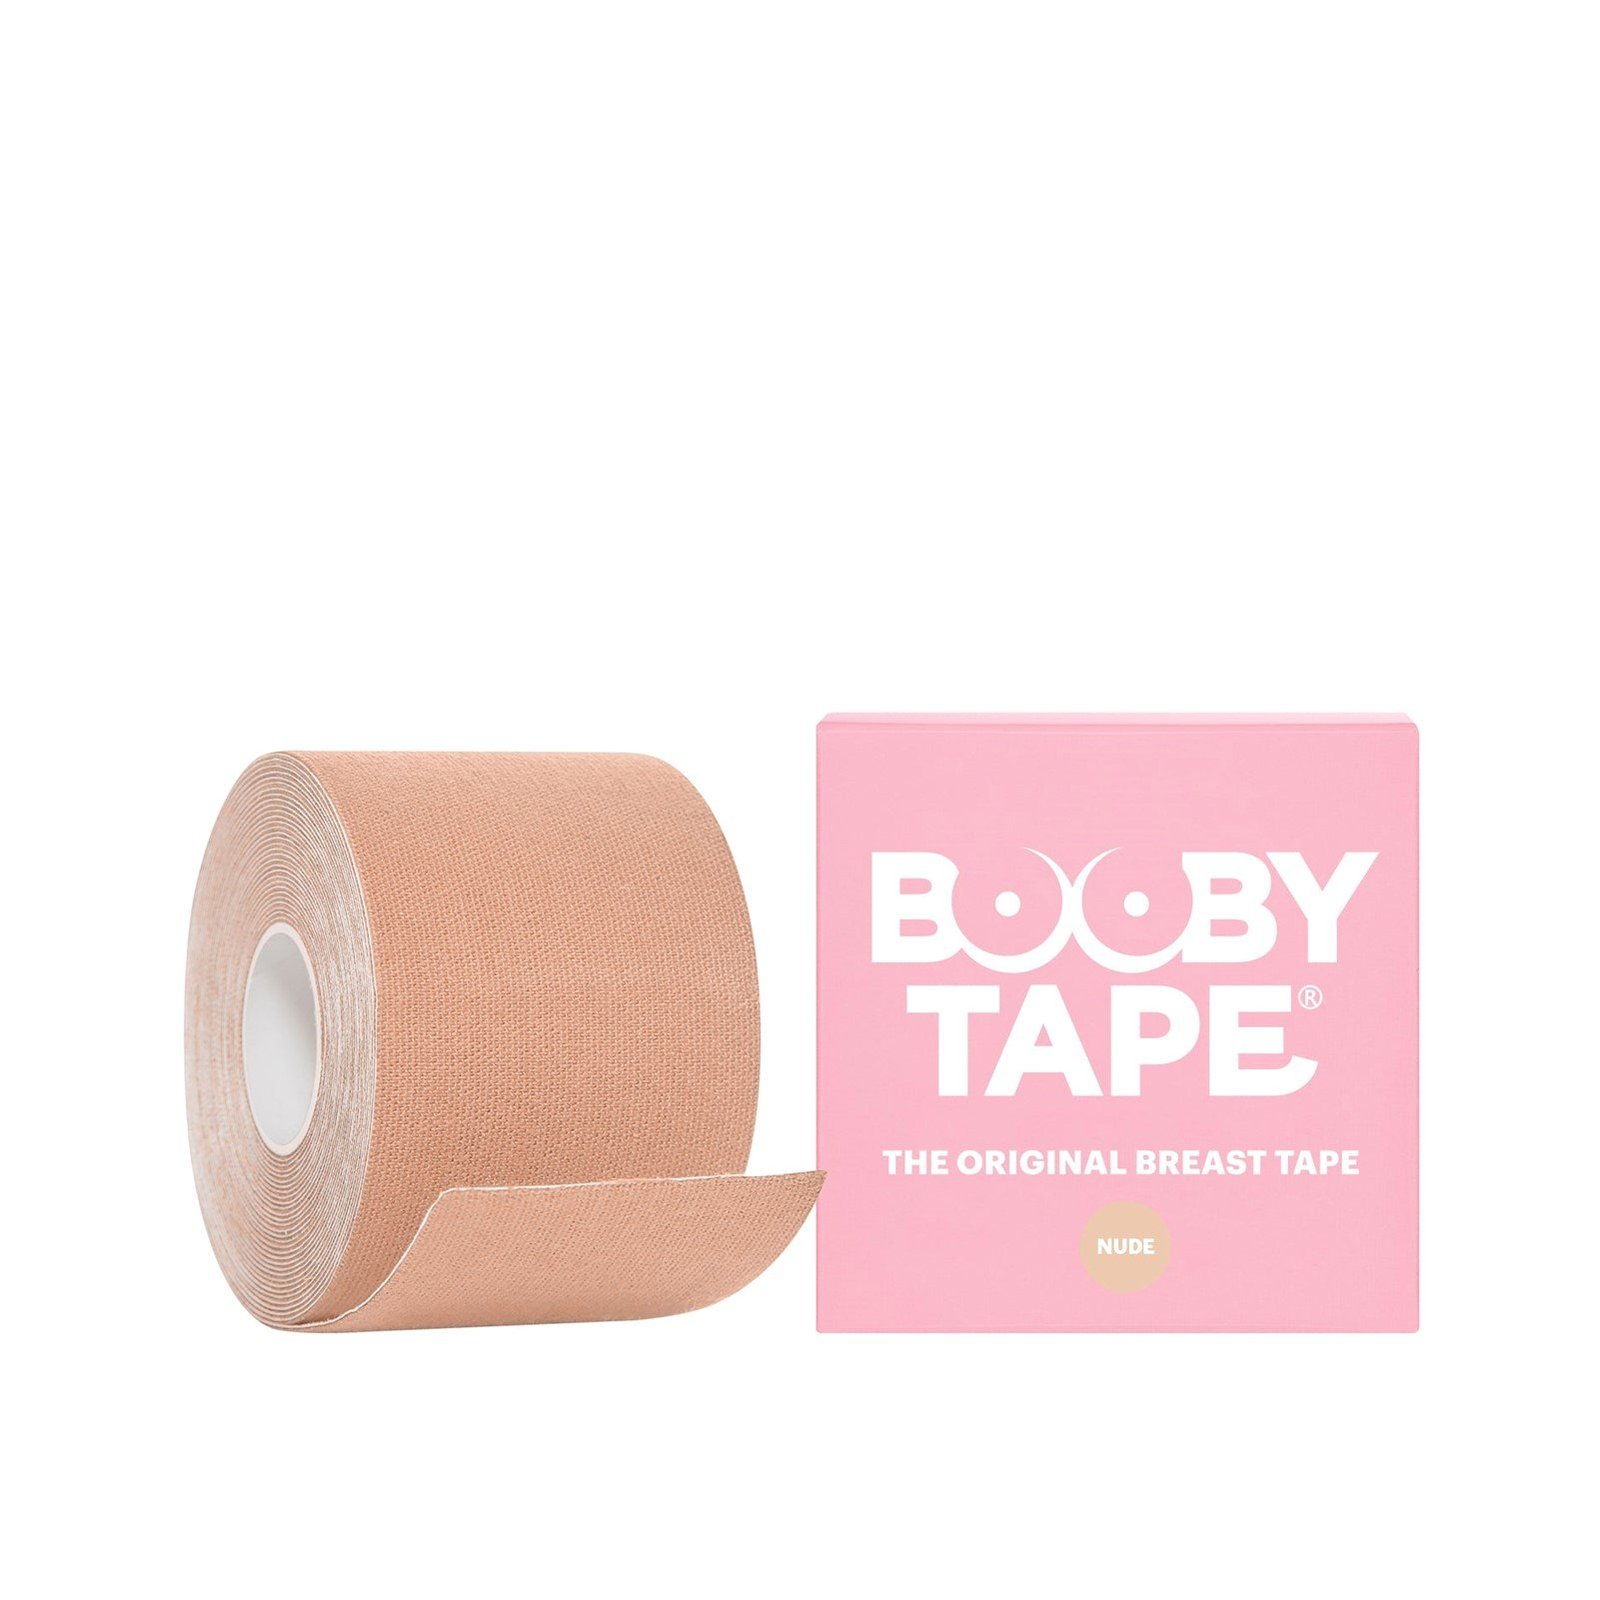 Booby Tape The Original Breast Tape Nude 5m